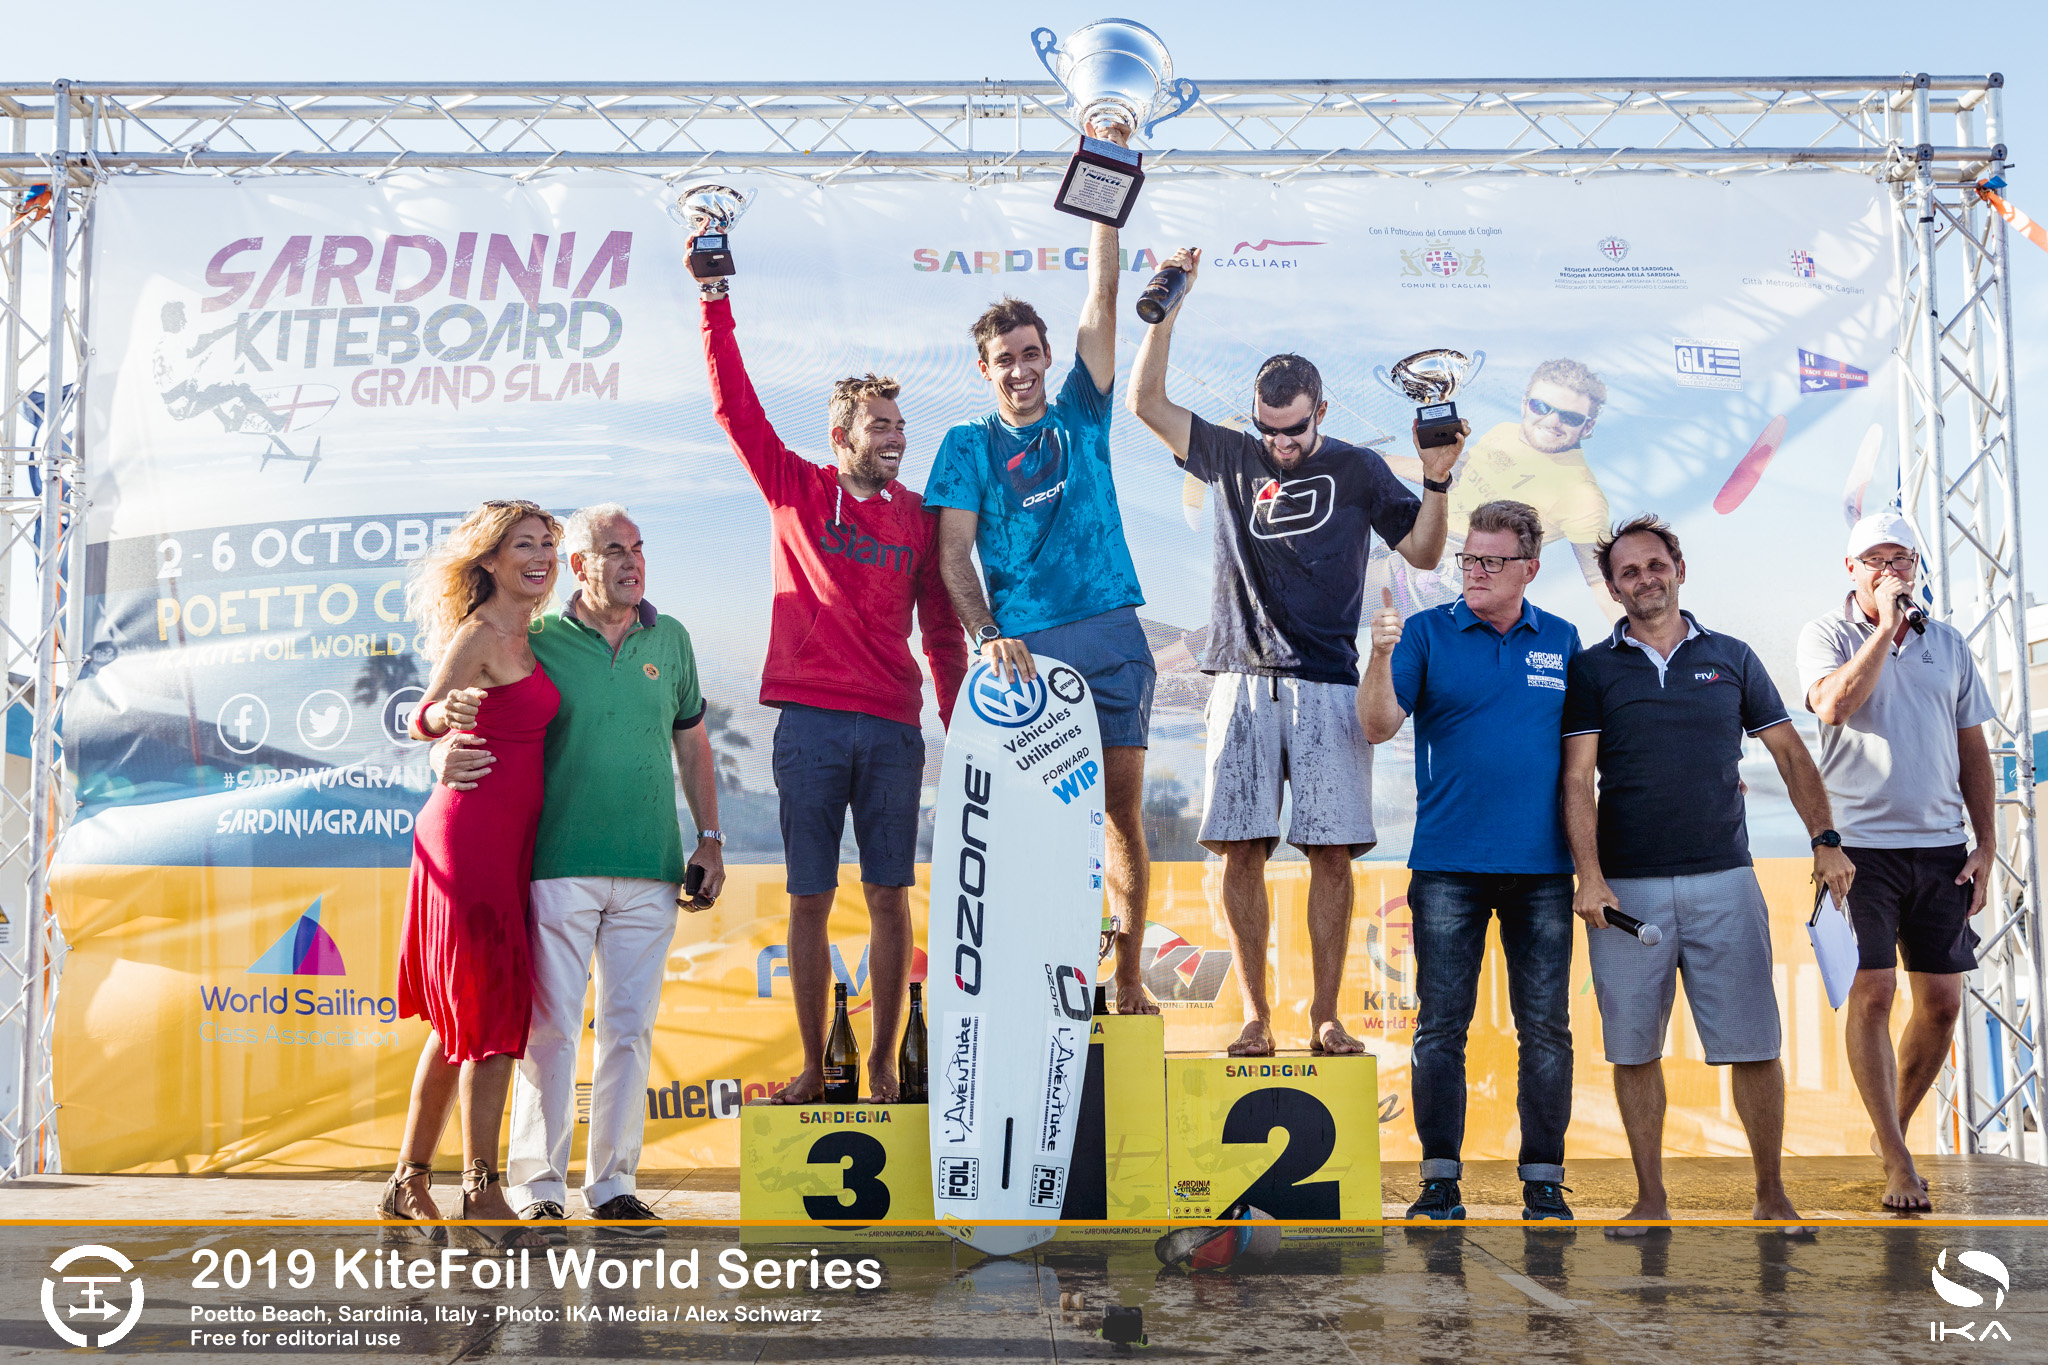 The Sardinia Grand Slam crowns Axel Mazella